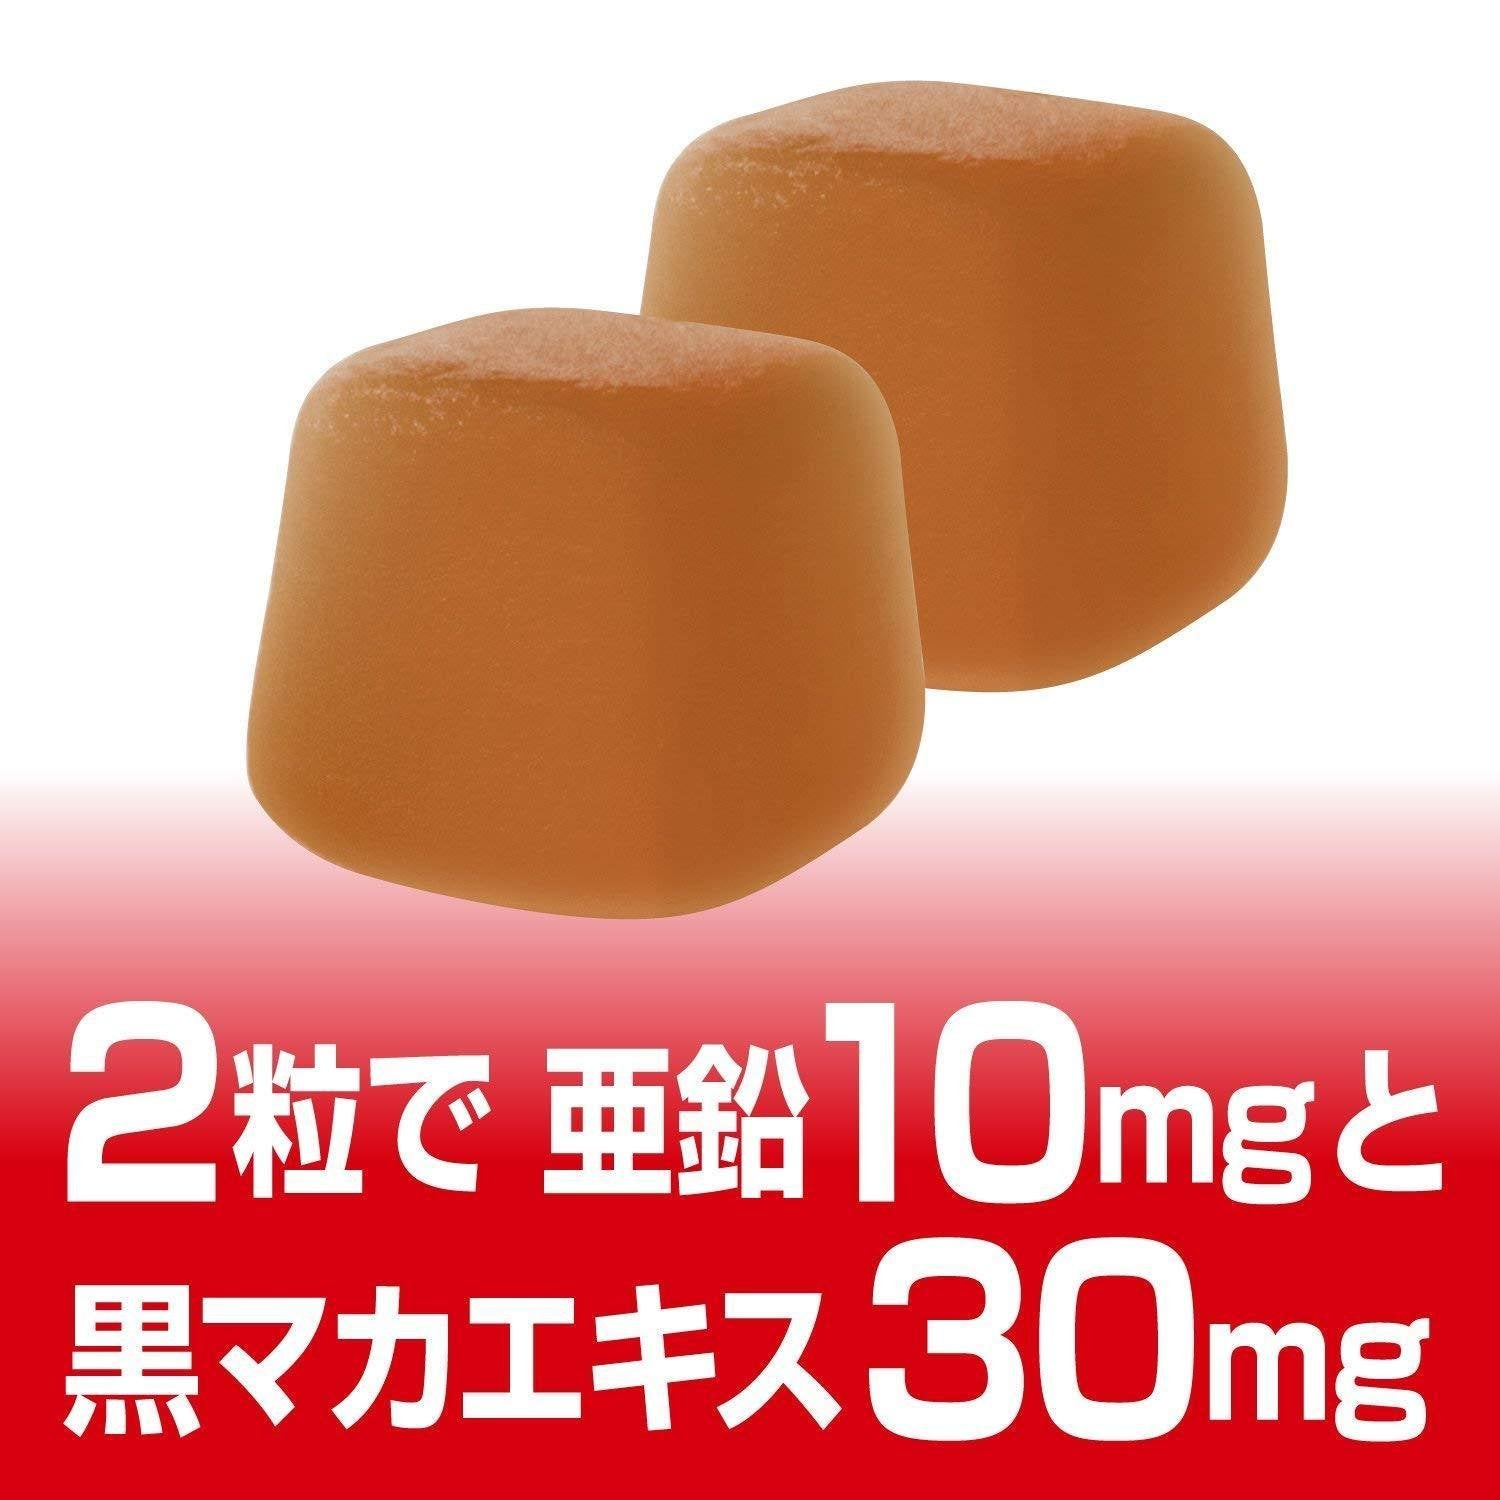 UHA Mikakuto Zinc & Maca Gummy Supplement Cola Gummies 60 ct.